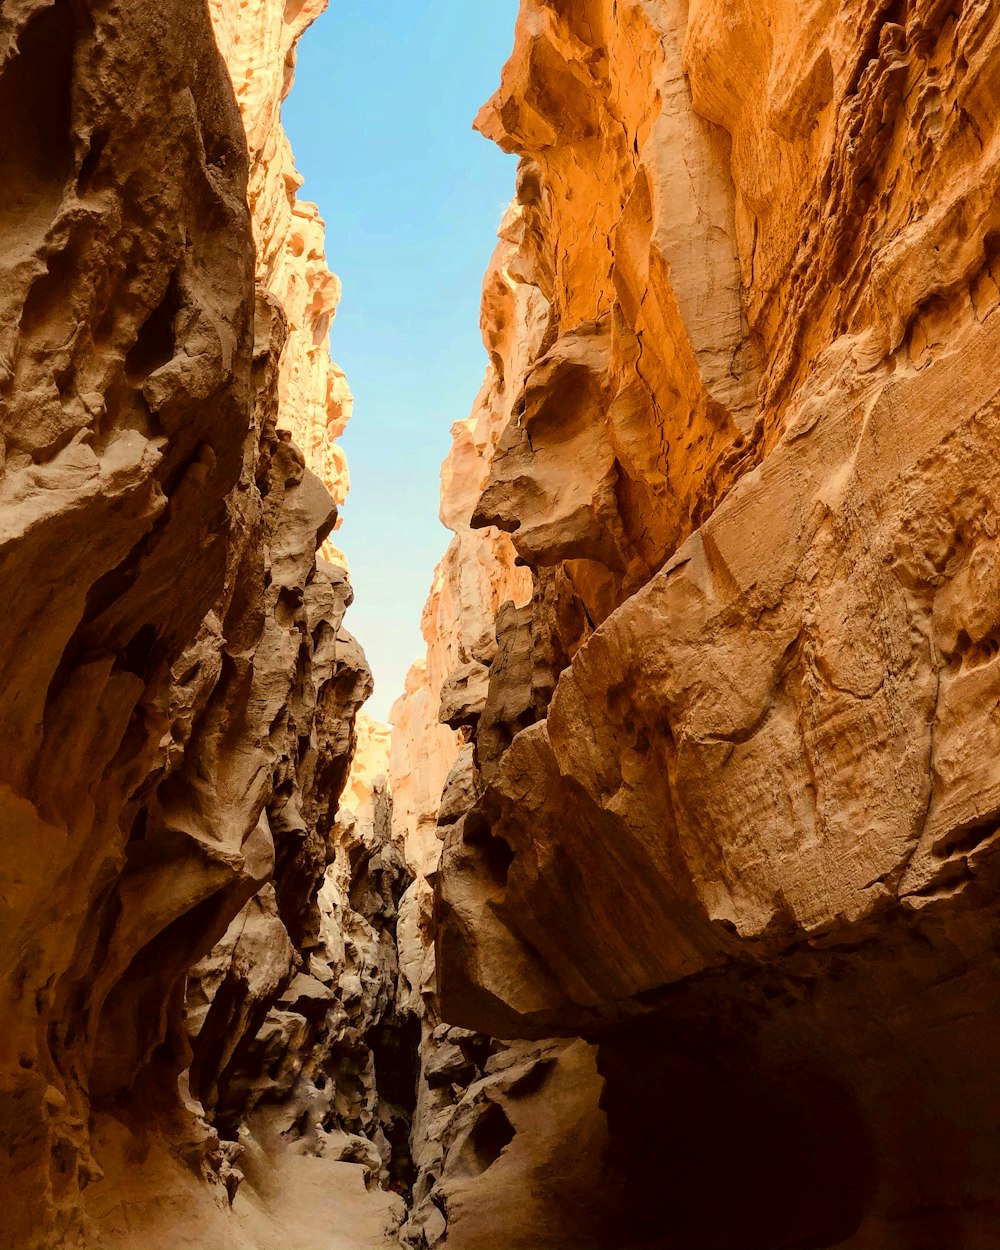 a narrow narrow canyon with a person walking through it